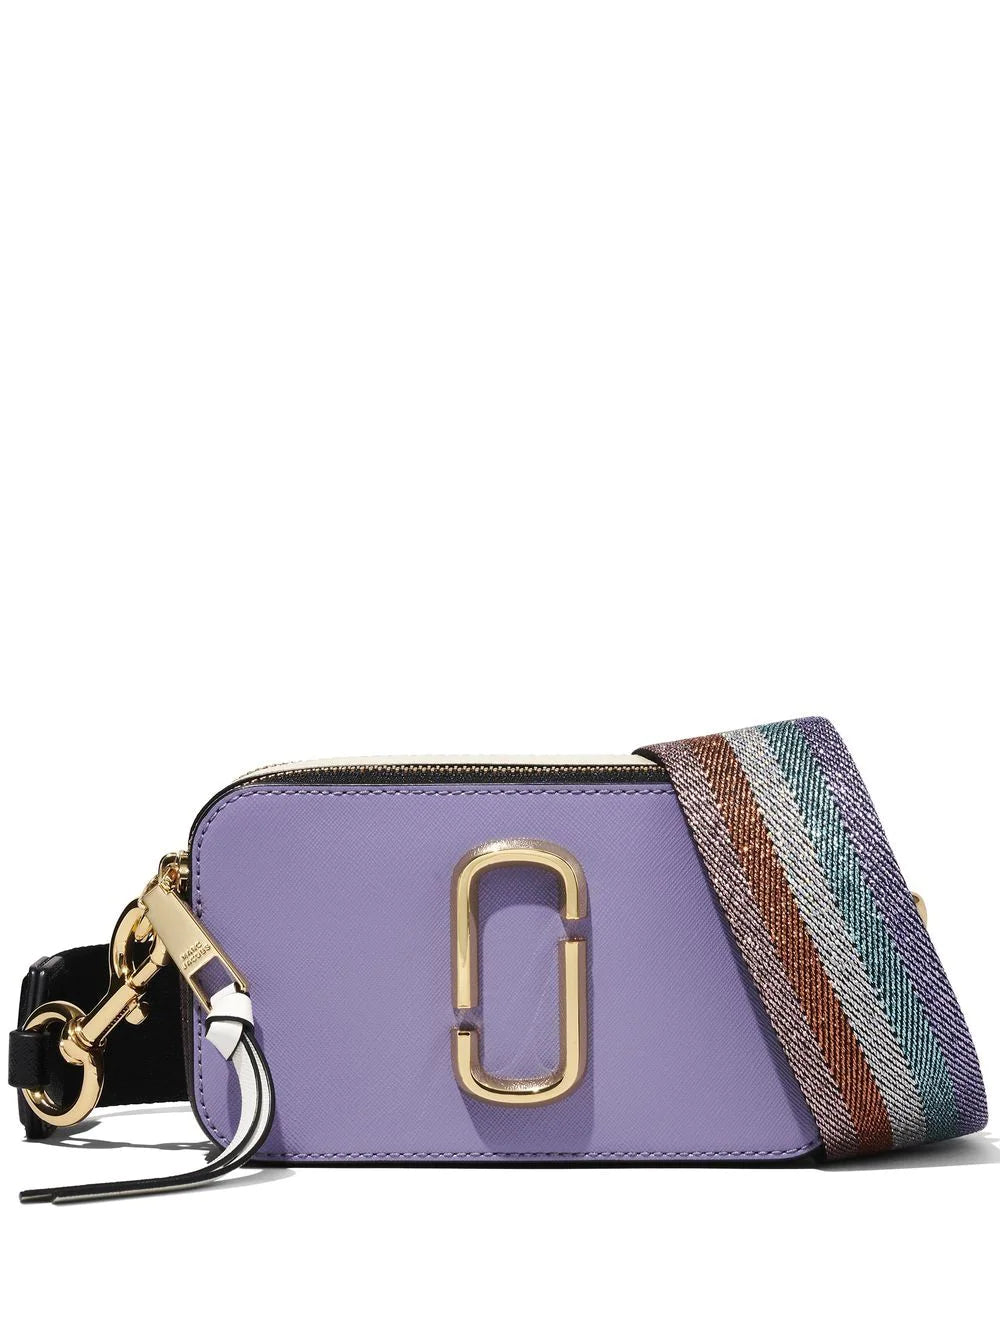 Marc Jacobs Purple 'The Colorblock Snapshot' Bag for Women